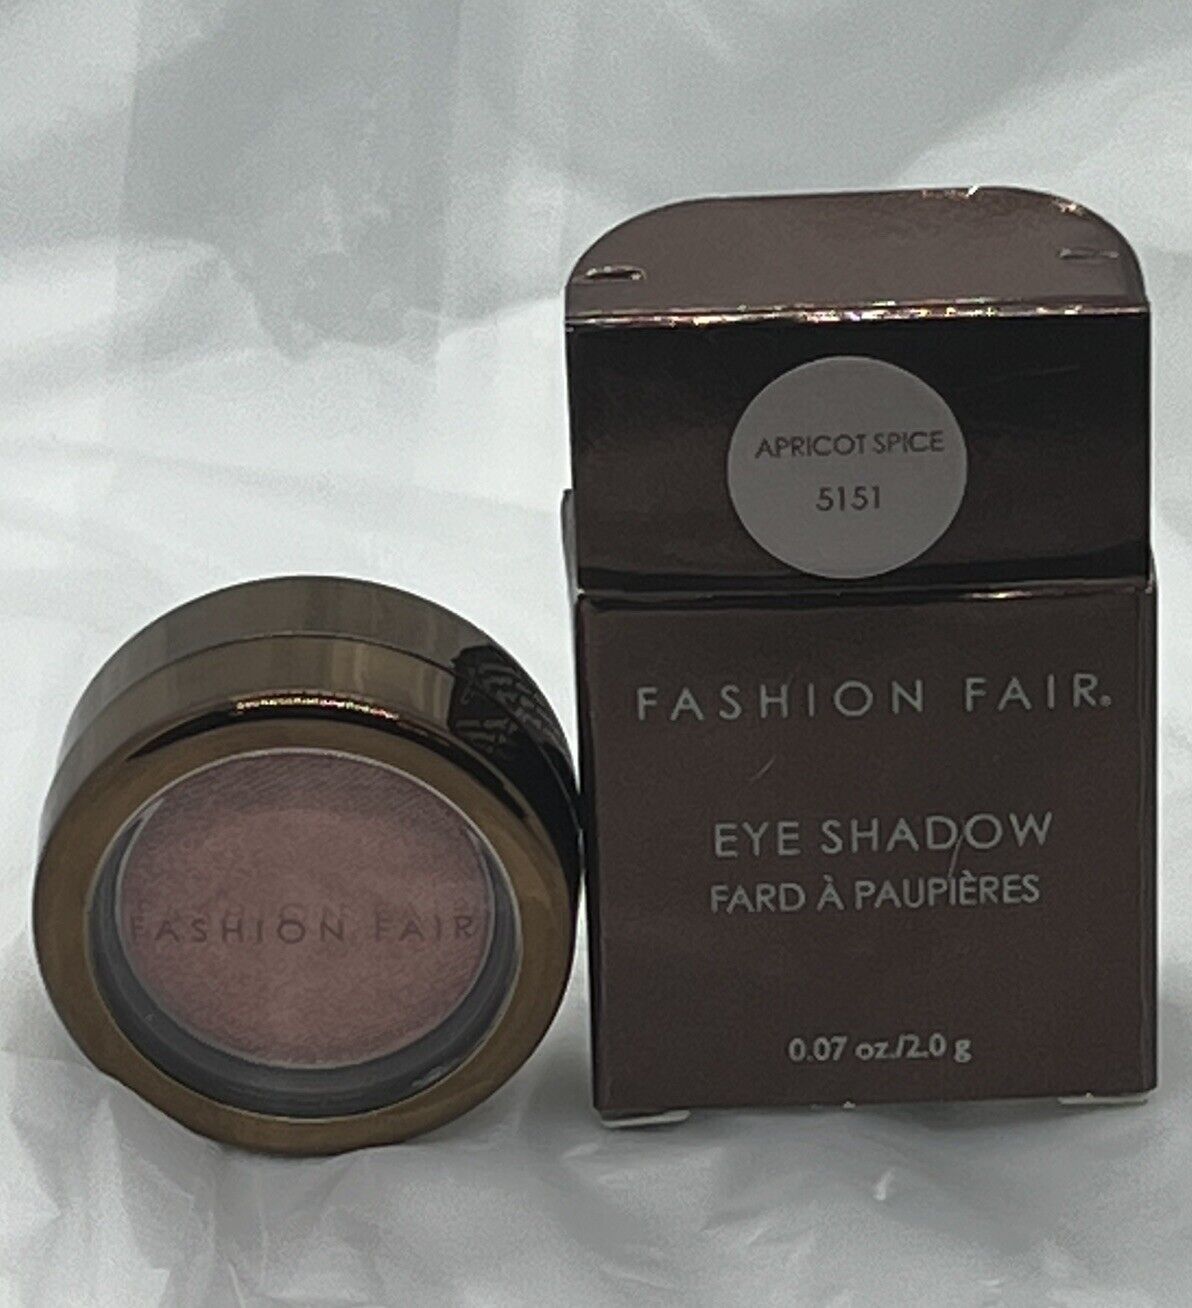 Fashion Fair Eye Shadow Apricot Spice 5151 (0.07 oz) /Boxed - $34.65